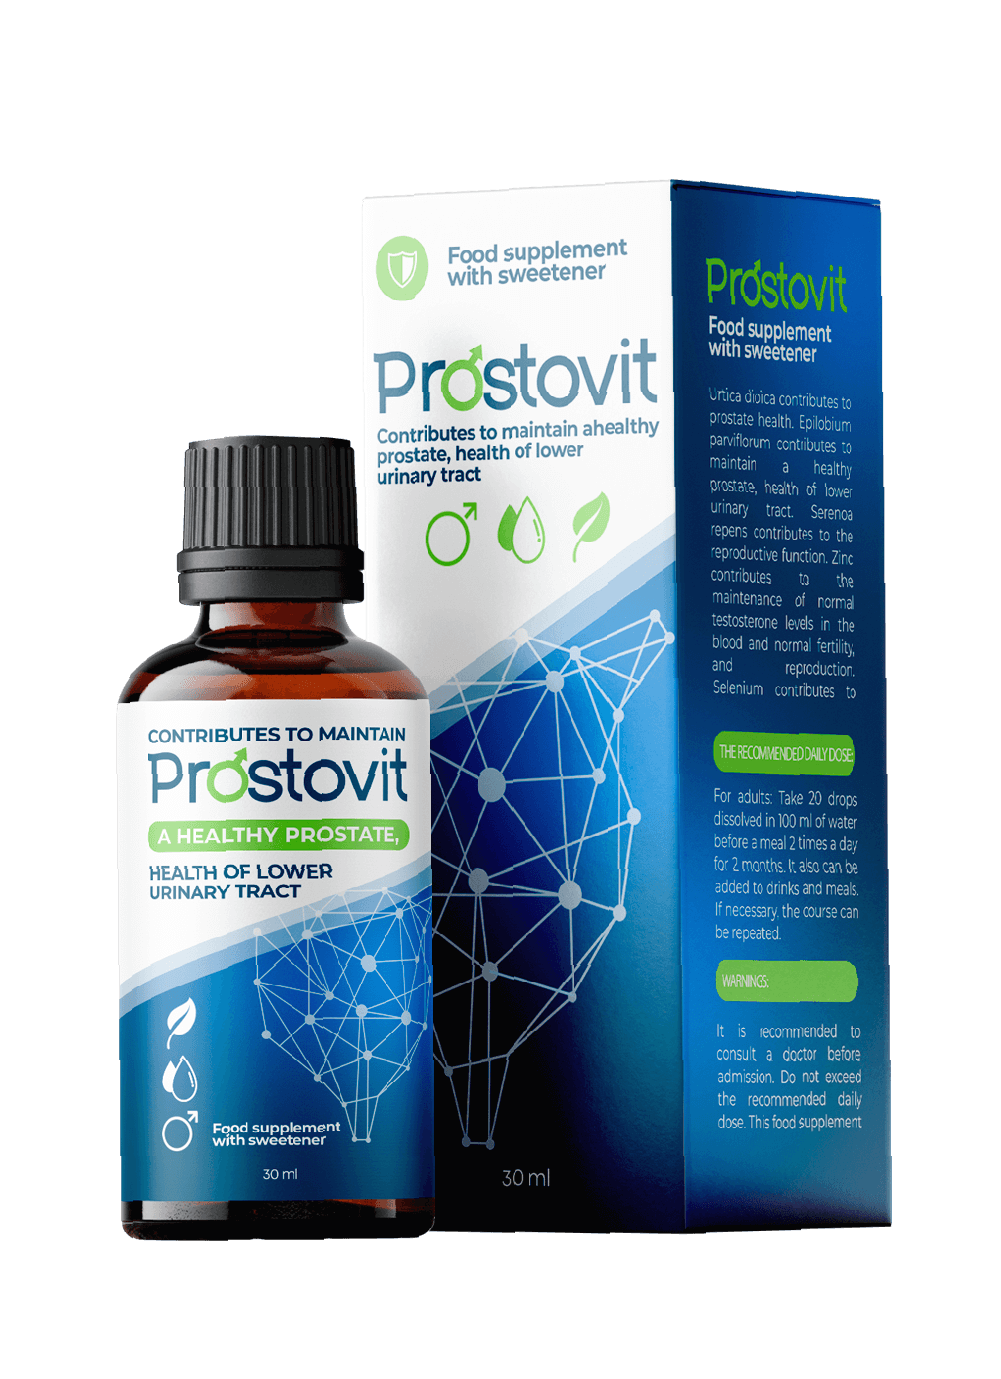 Prostovit - what is it